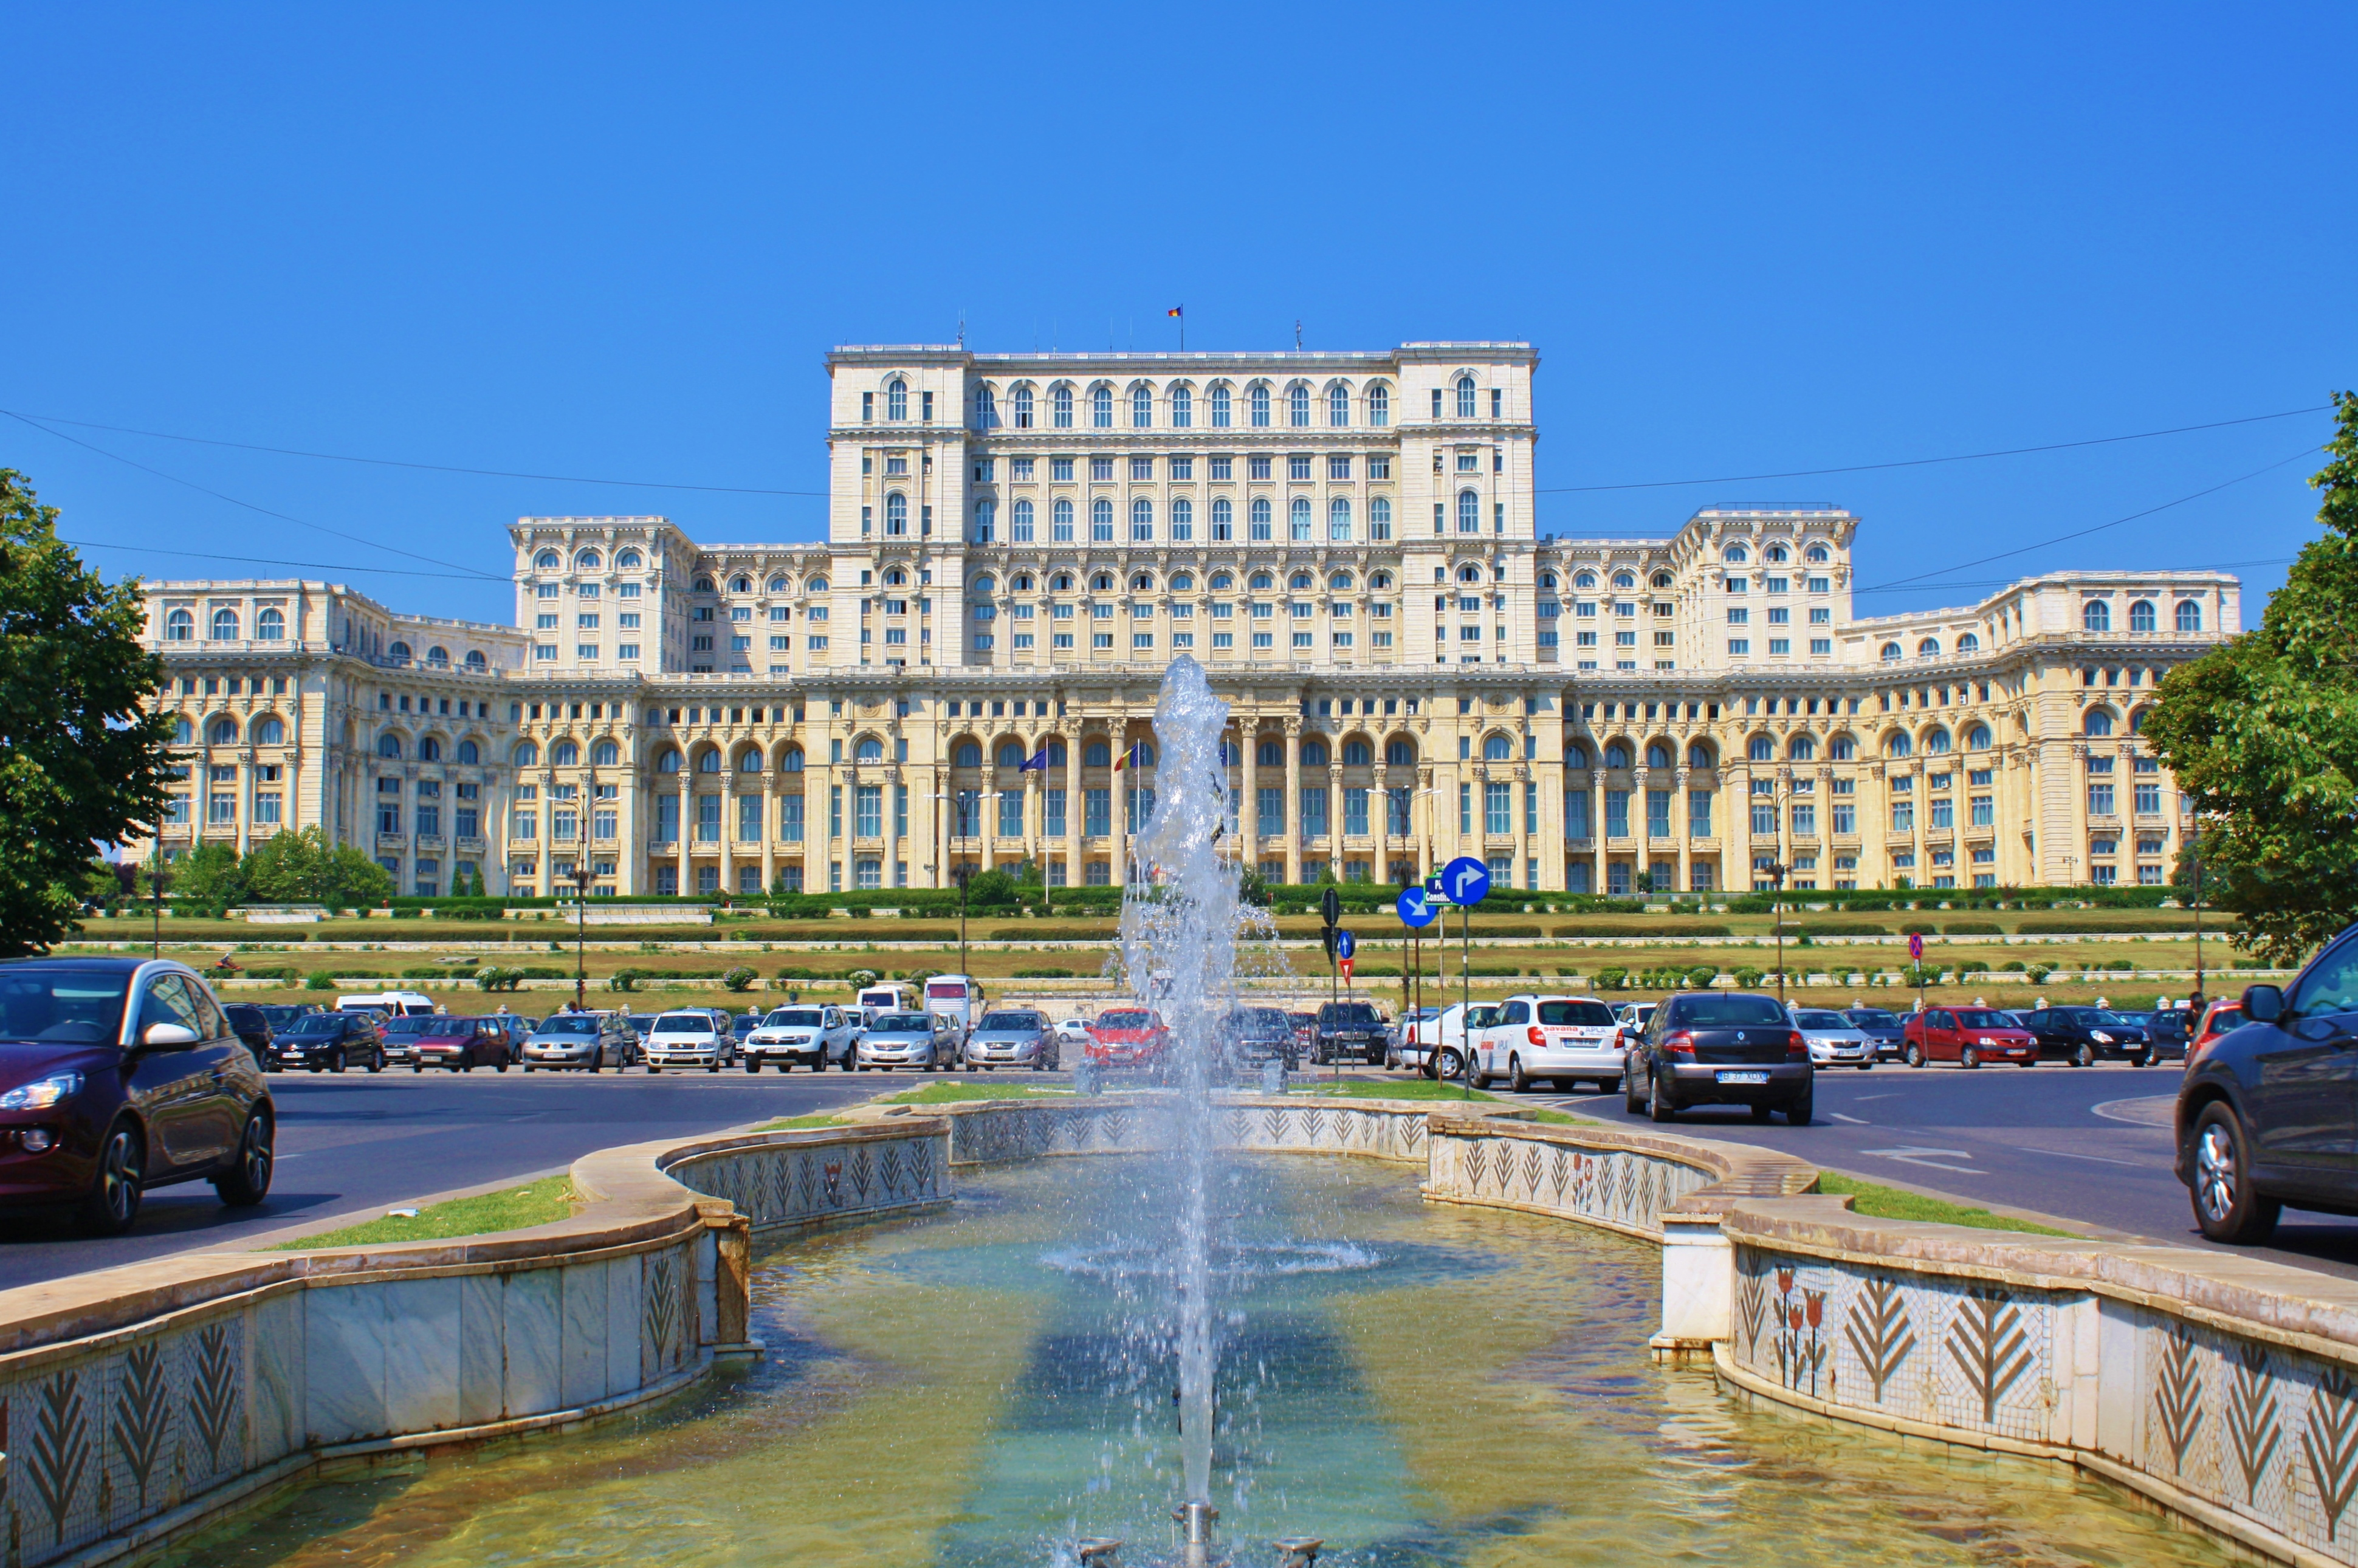 Bucharest City Break: Best 3 Day Weekend Itinerary - dobbernationLOVES